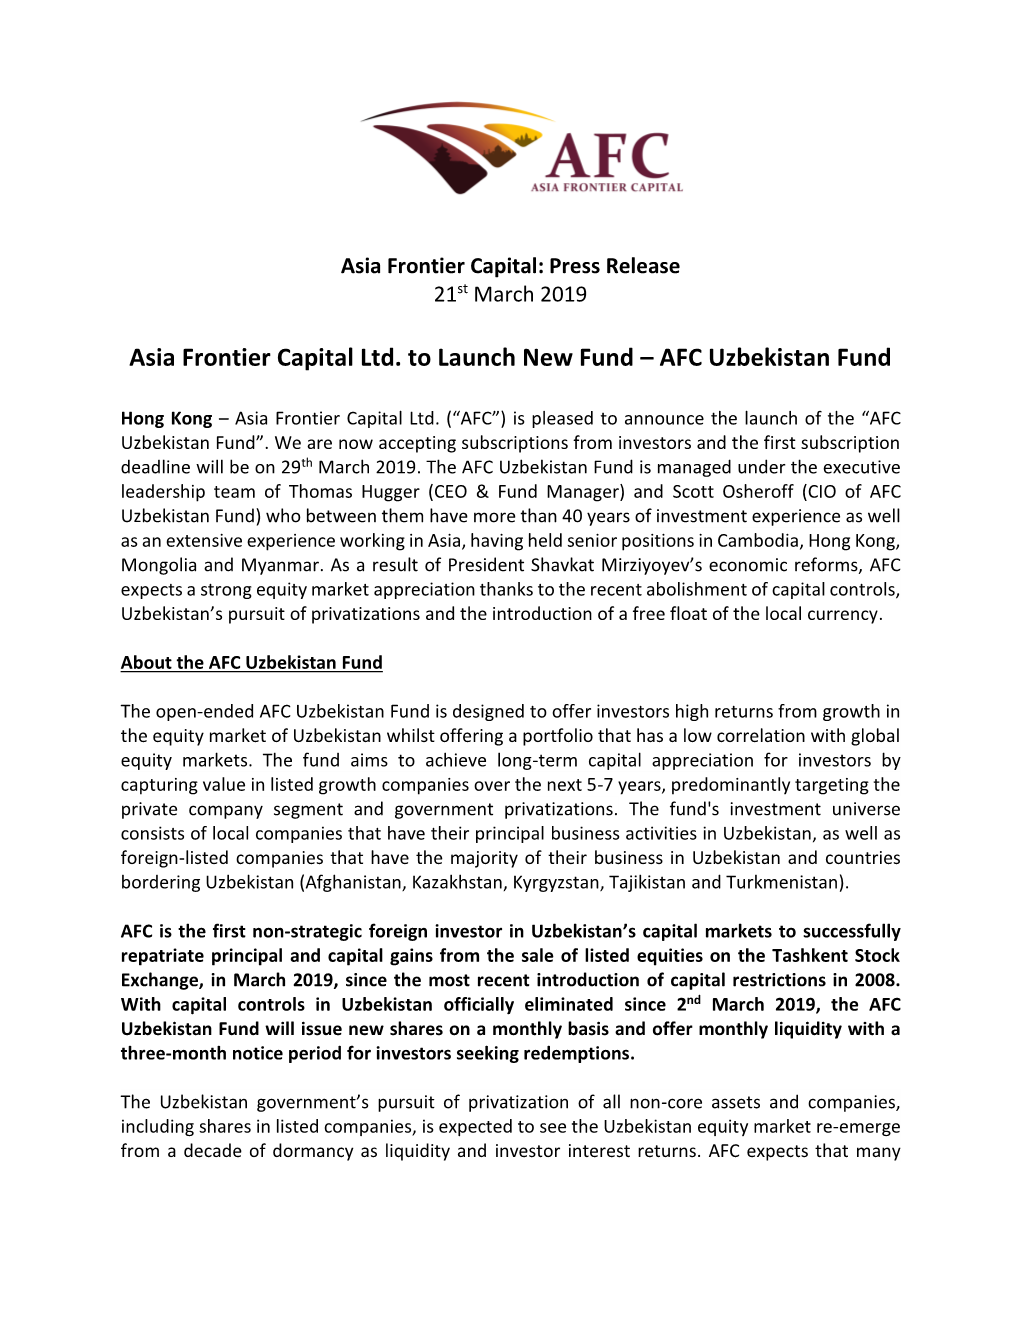 Asia Frontier Capital Ltd. to Launch New Fund – AFC Uzbekistan Fund